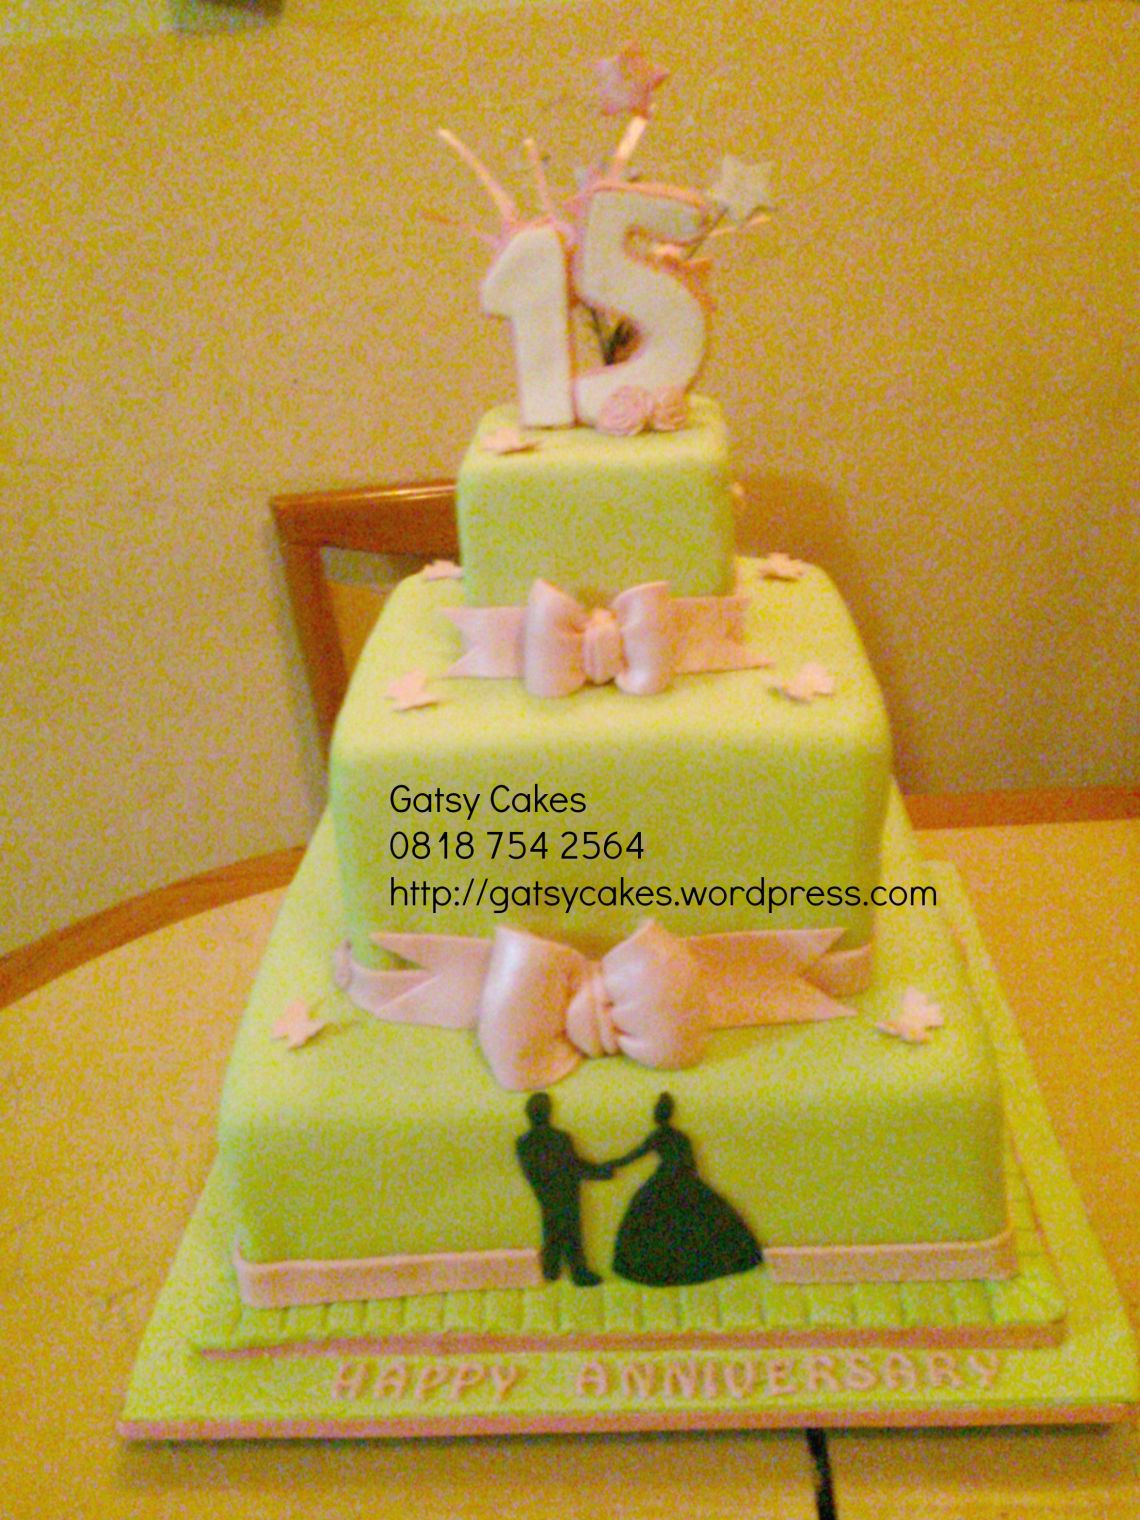 15th wedding anniversary cake